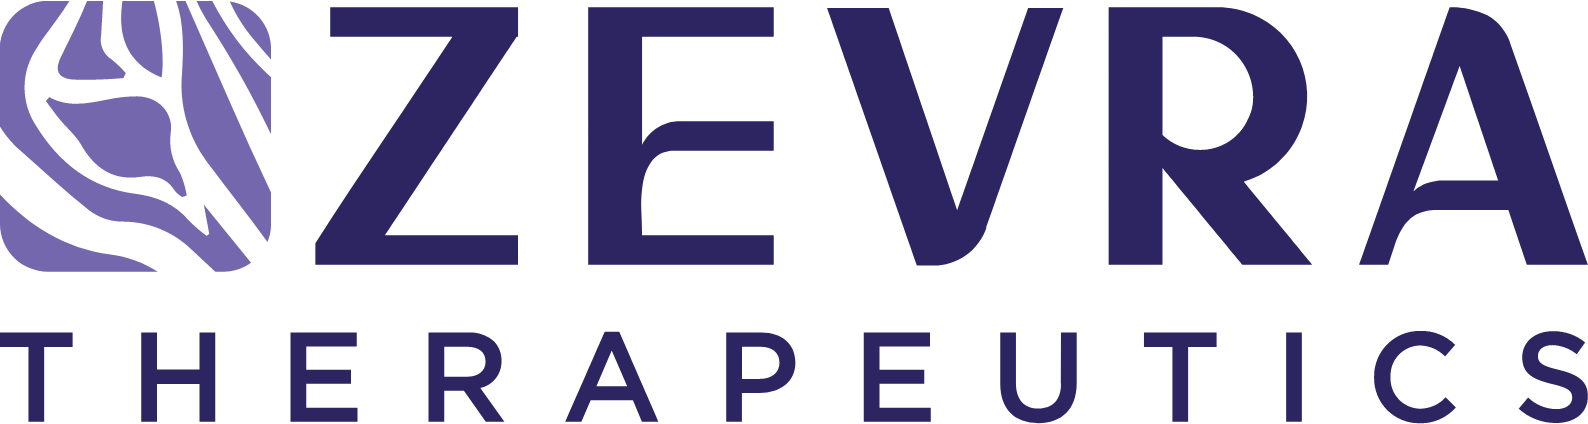 Zevra Therapeutics logo large (transparent PNG)